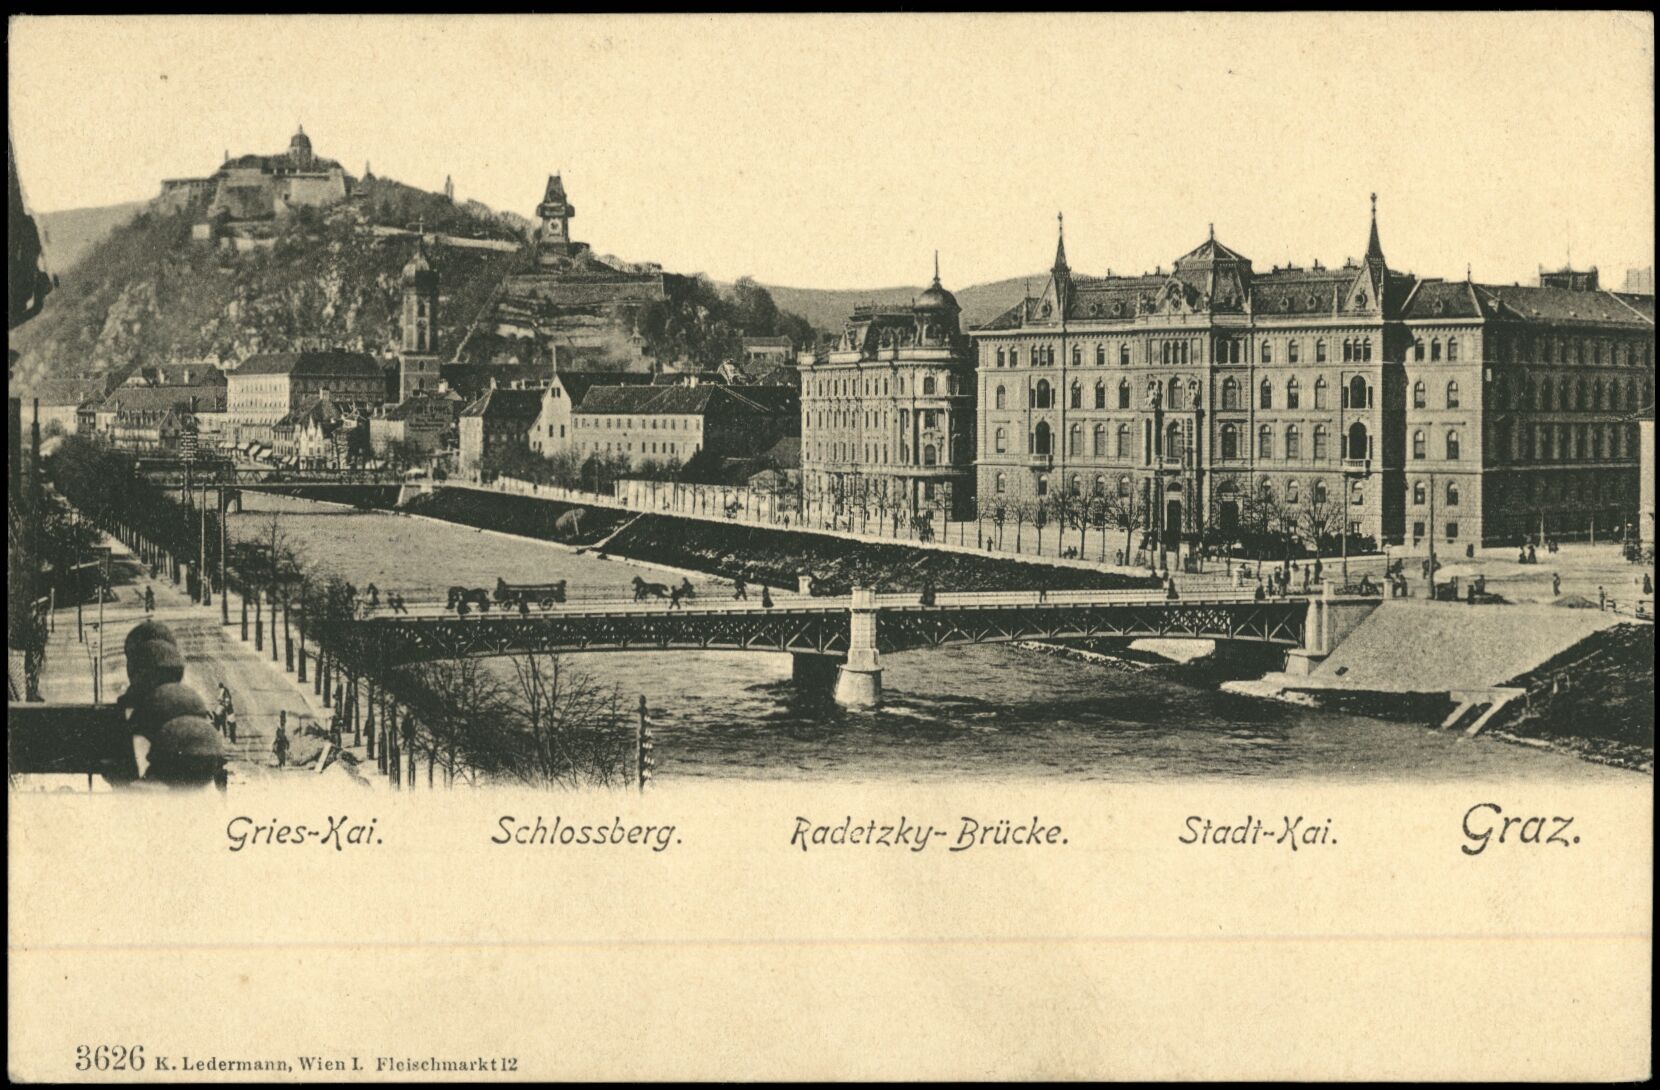 Graz, Gries-Kai, Schlossberg; Radetzky-Brücke; vor 1905; Österreichische Nationalbibliothek. Ansichtskarten online. httpdata.onb.ac.atAKONAK064_093